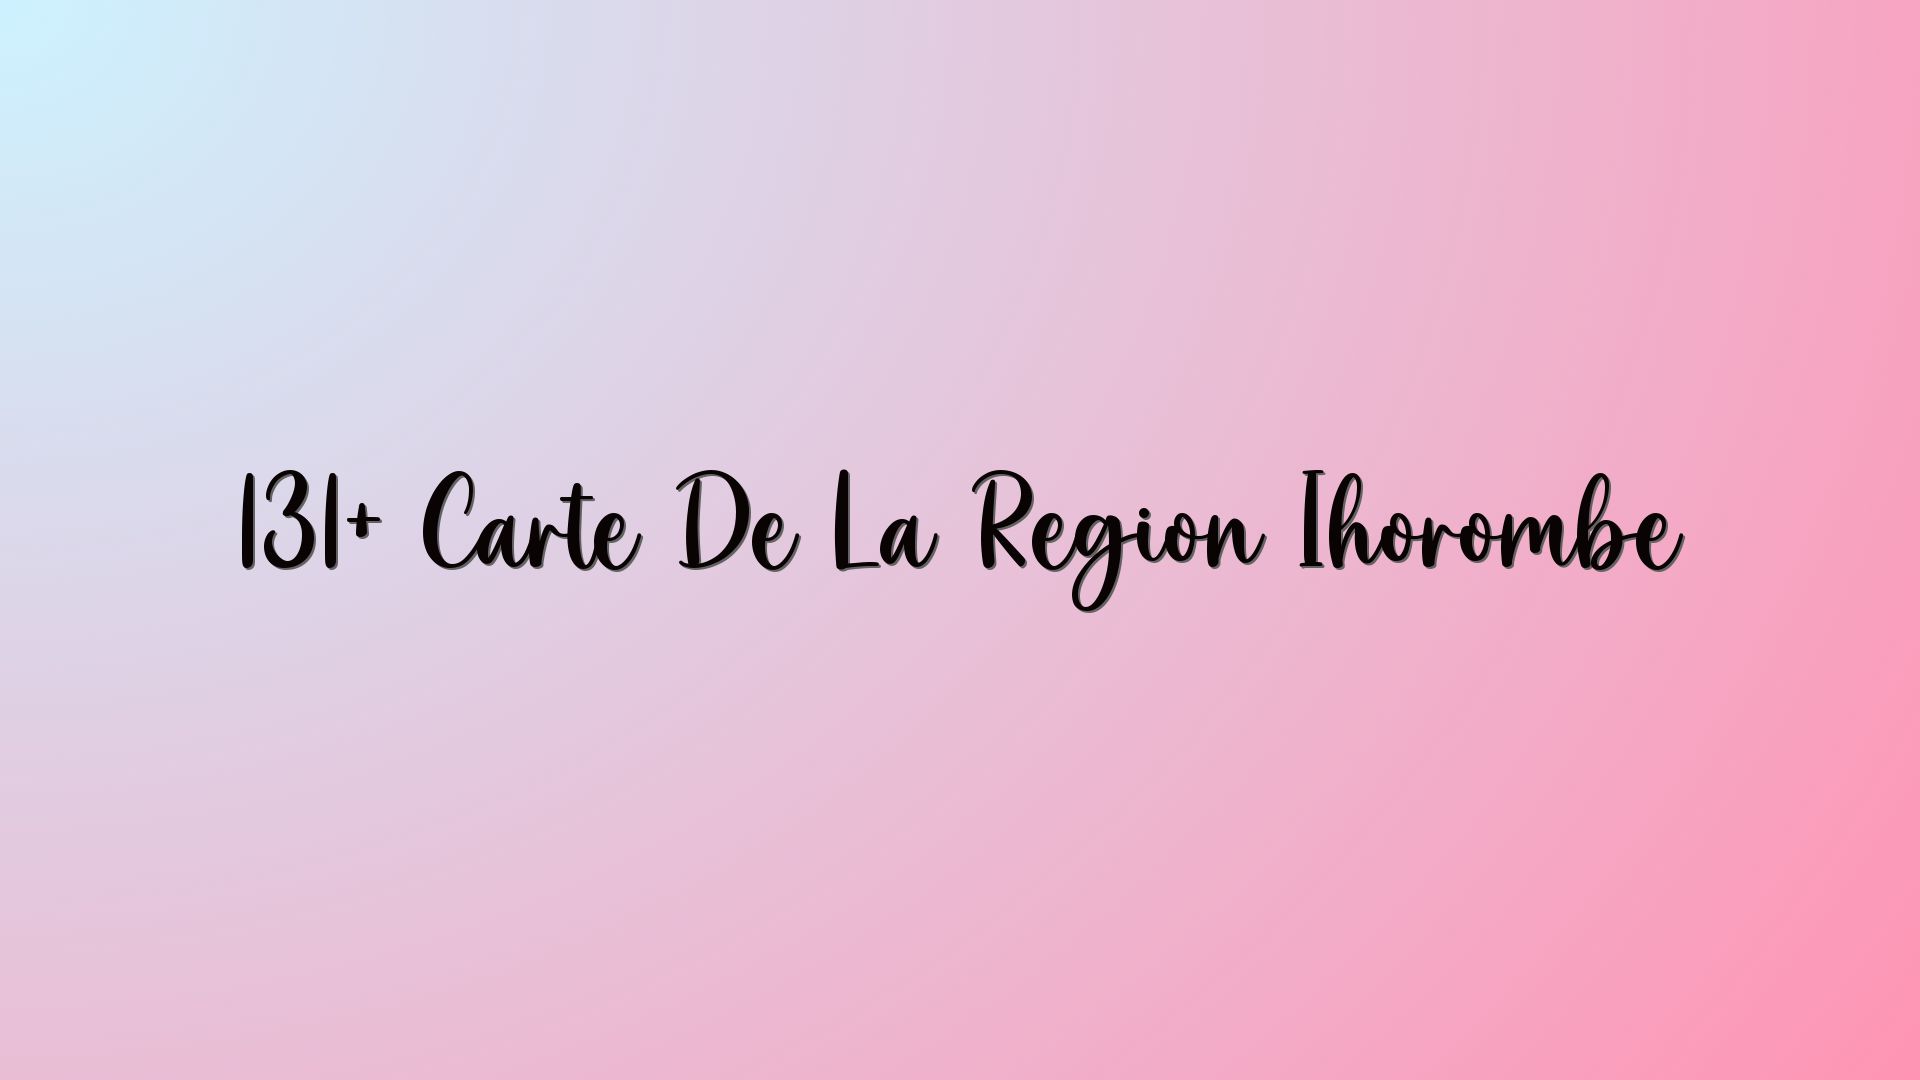 131+ Carte De La Region Ihorombe